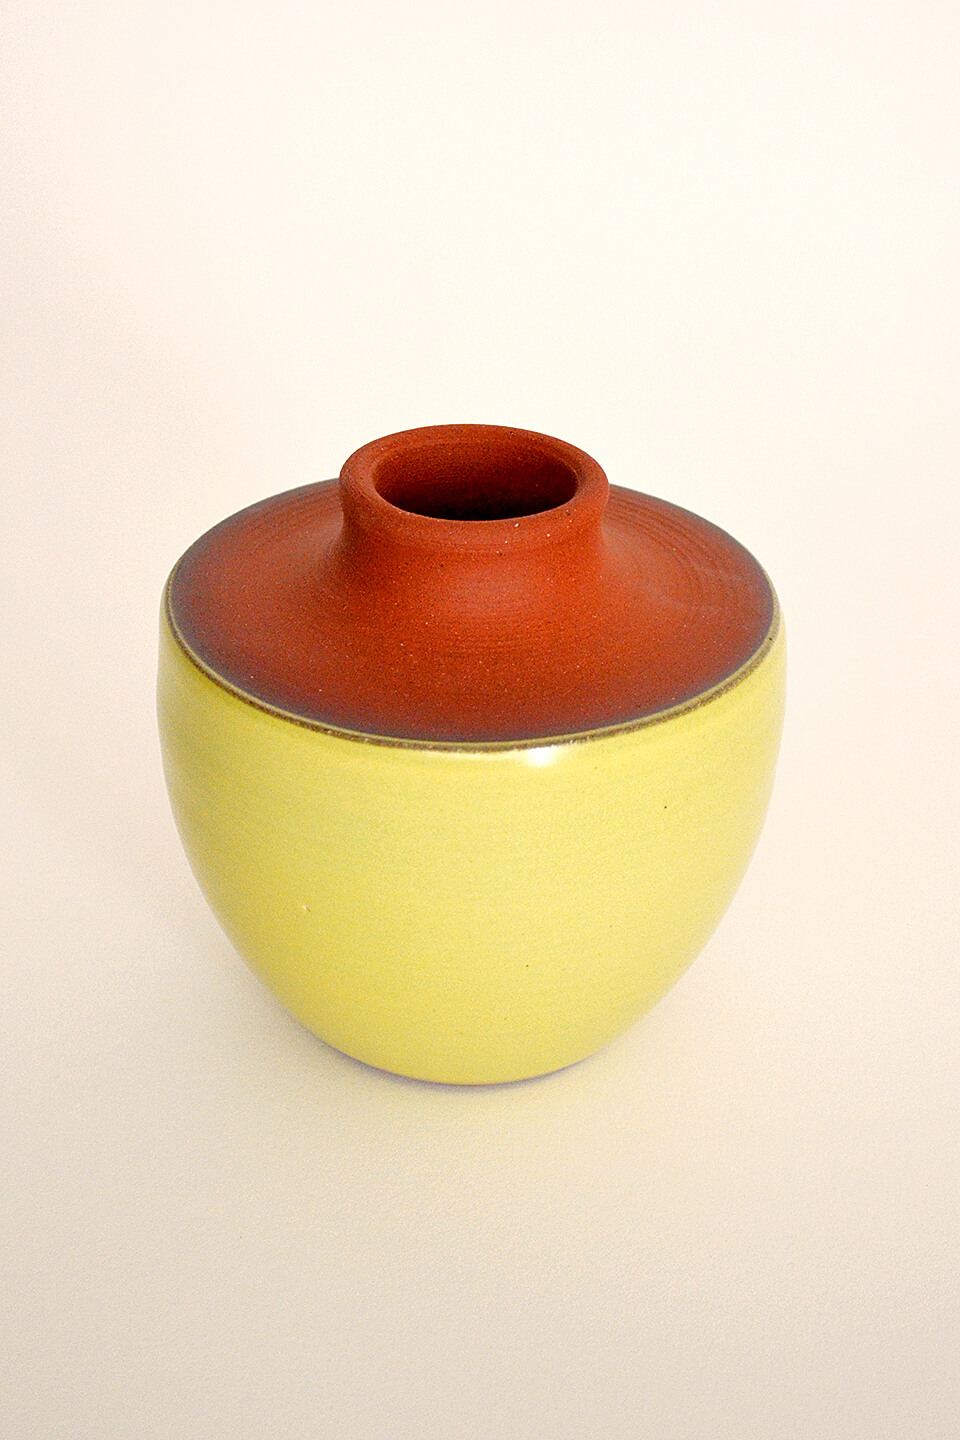 Satin Yellow Green Ceramic Vase No. 617